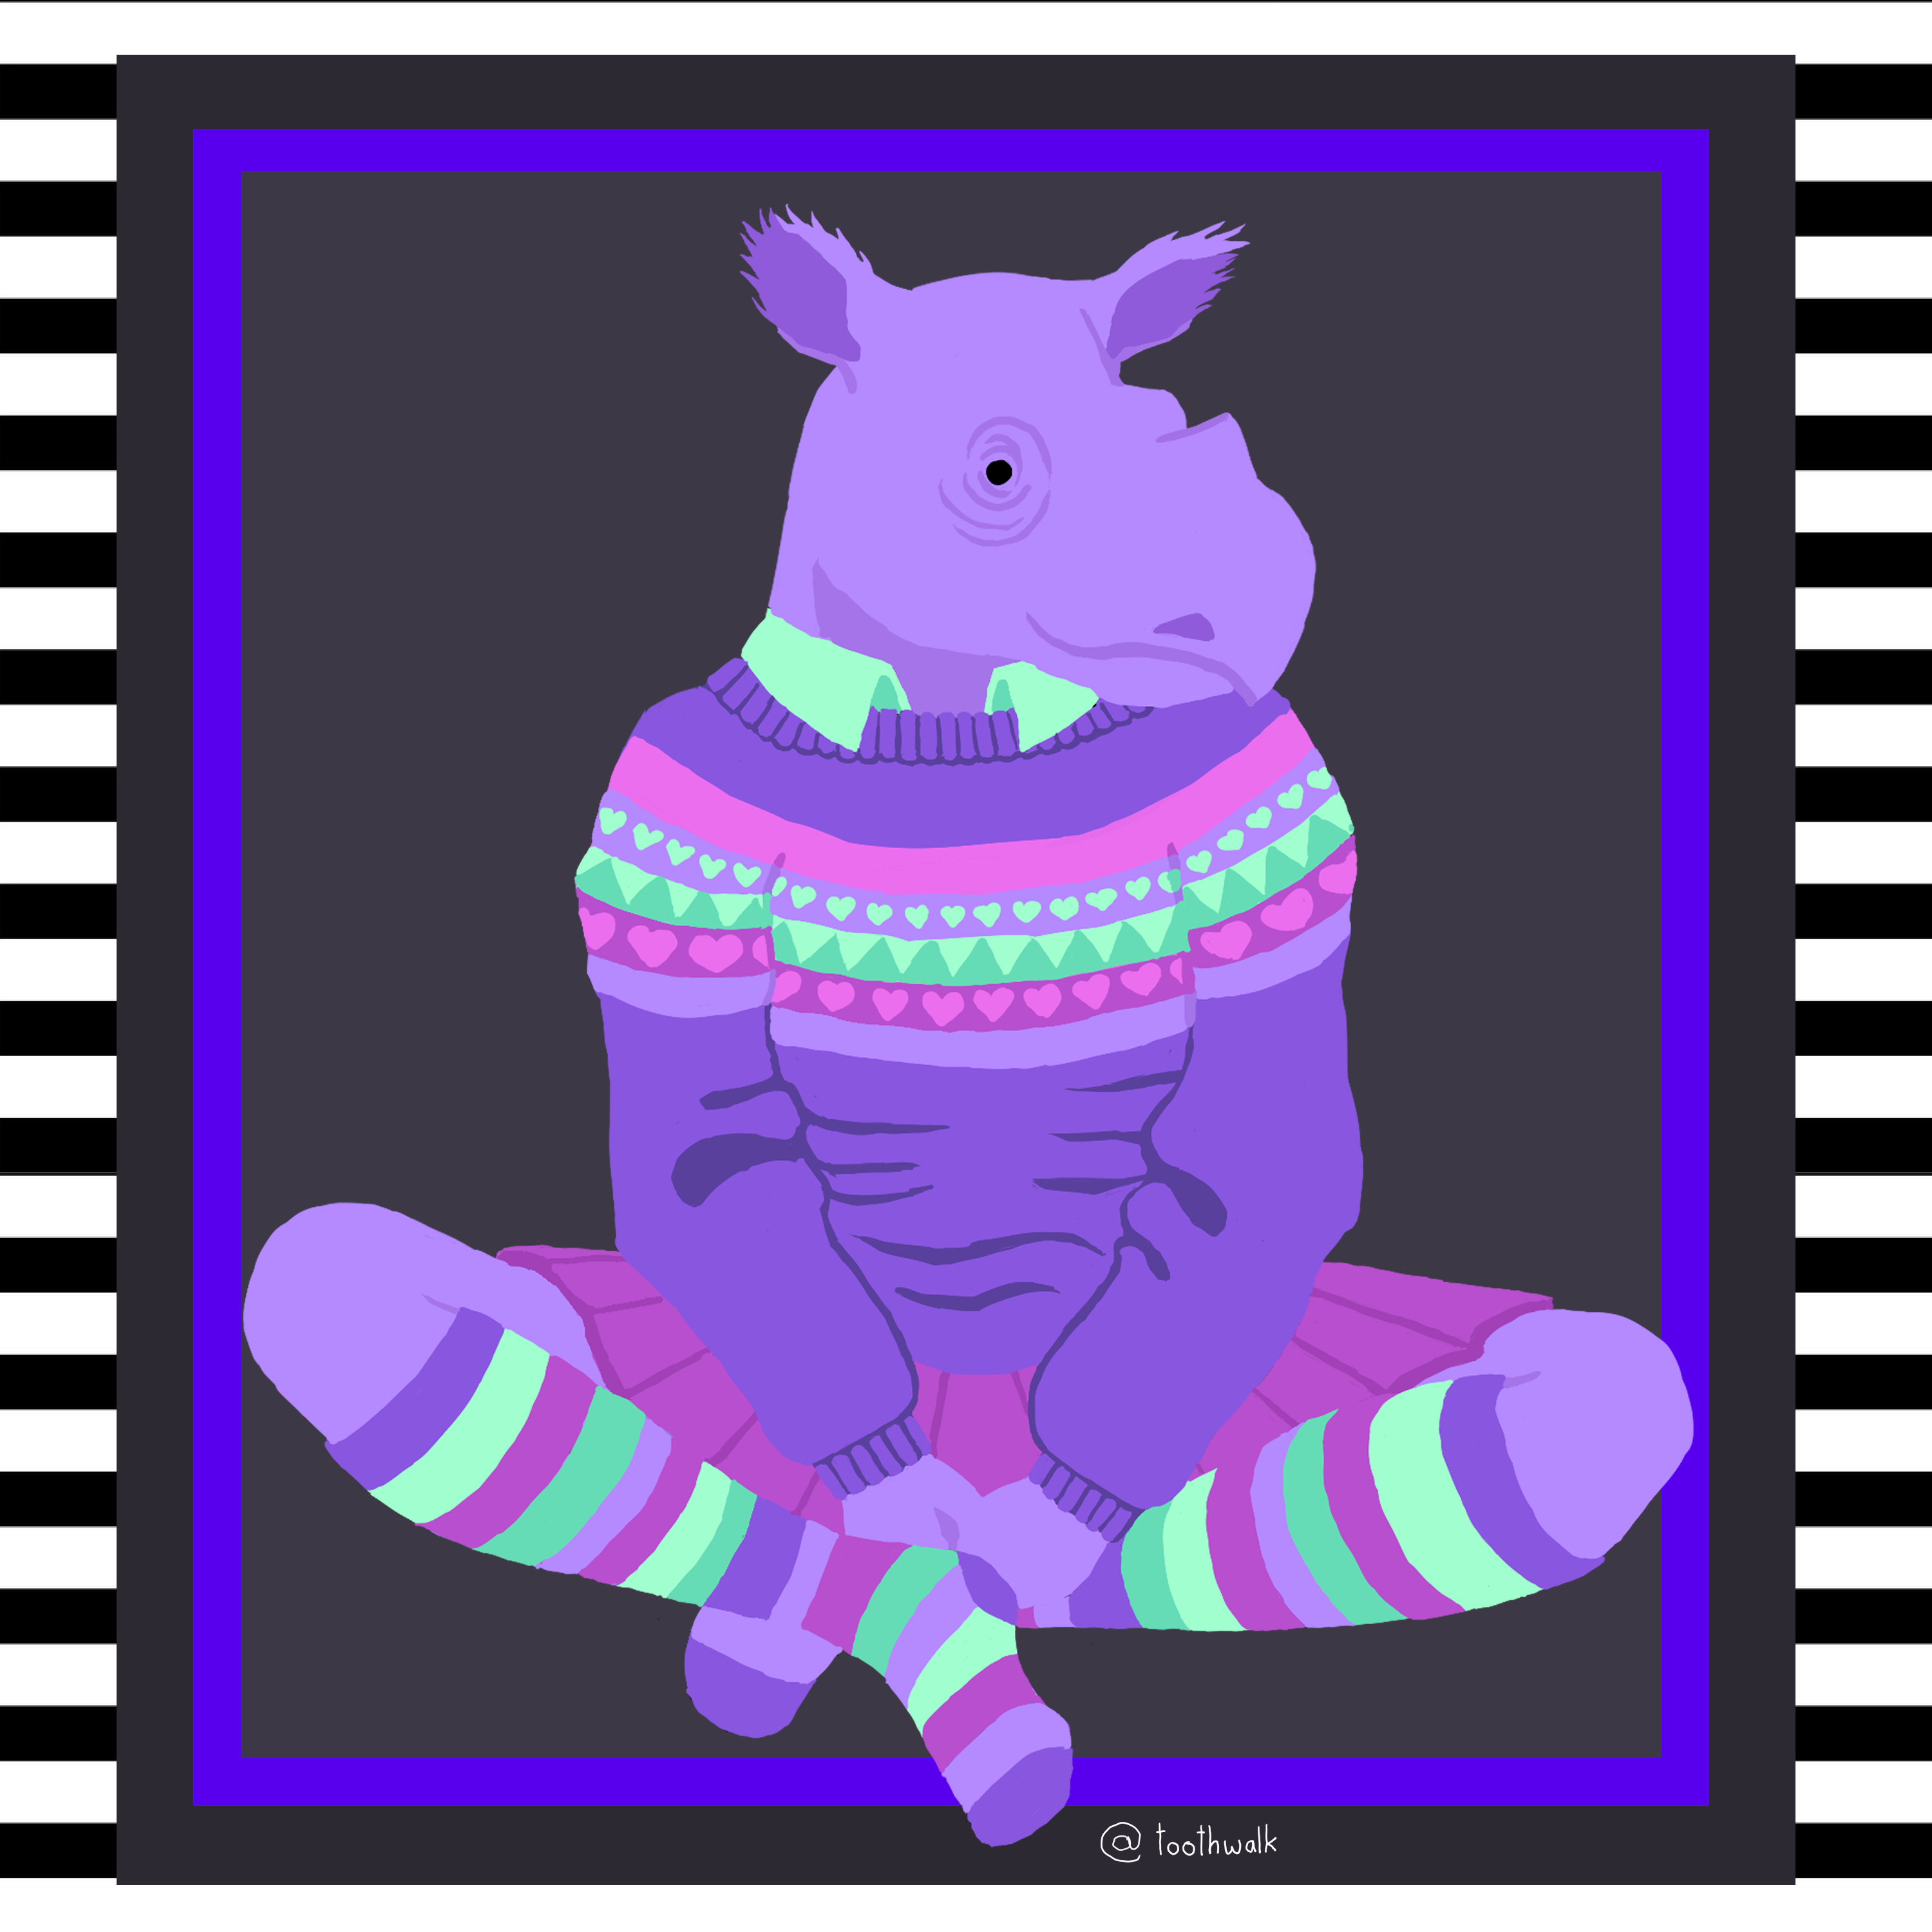 Full body image of an anthropomorphic purple rhino girl